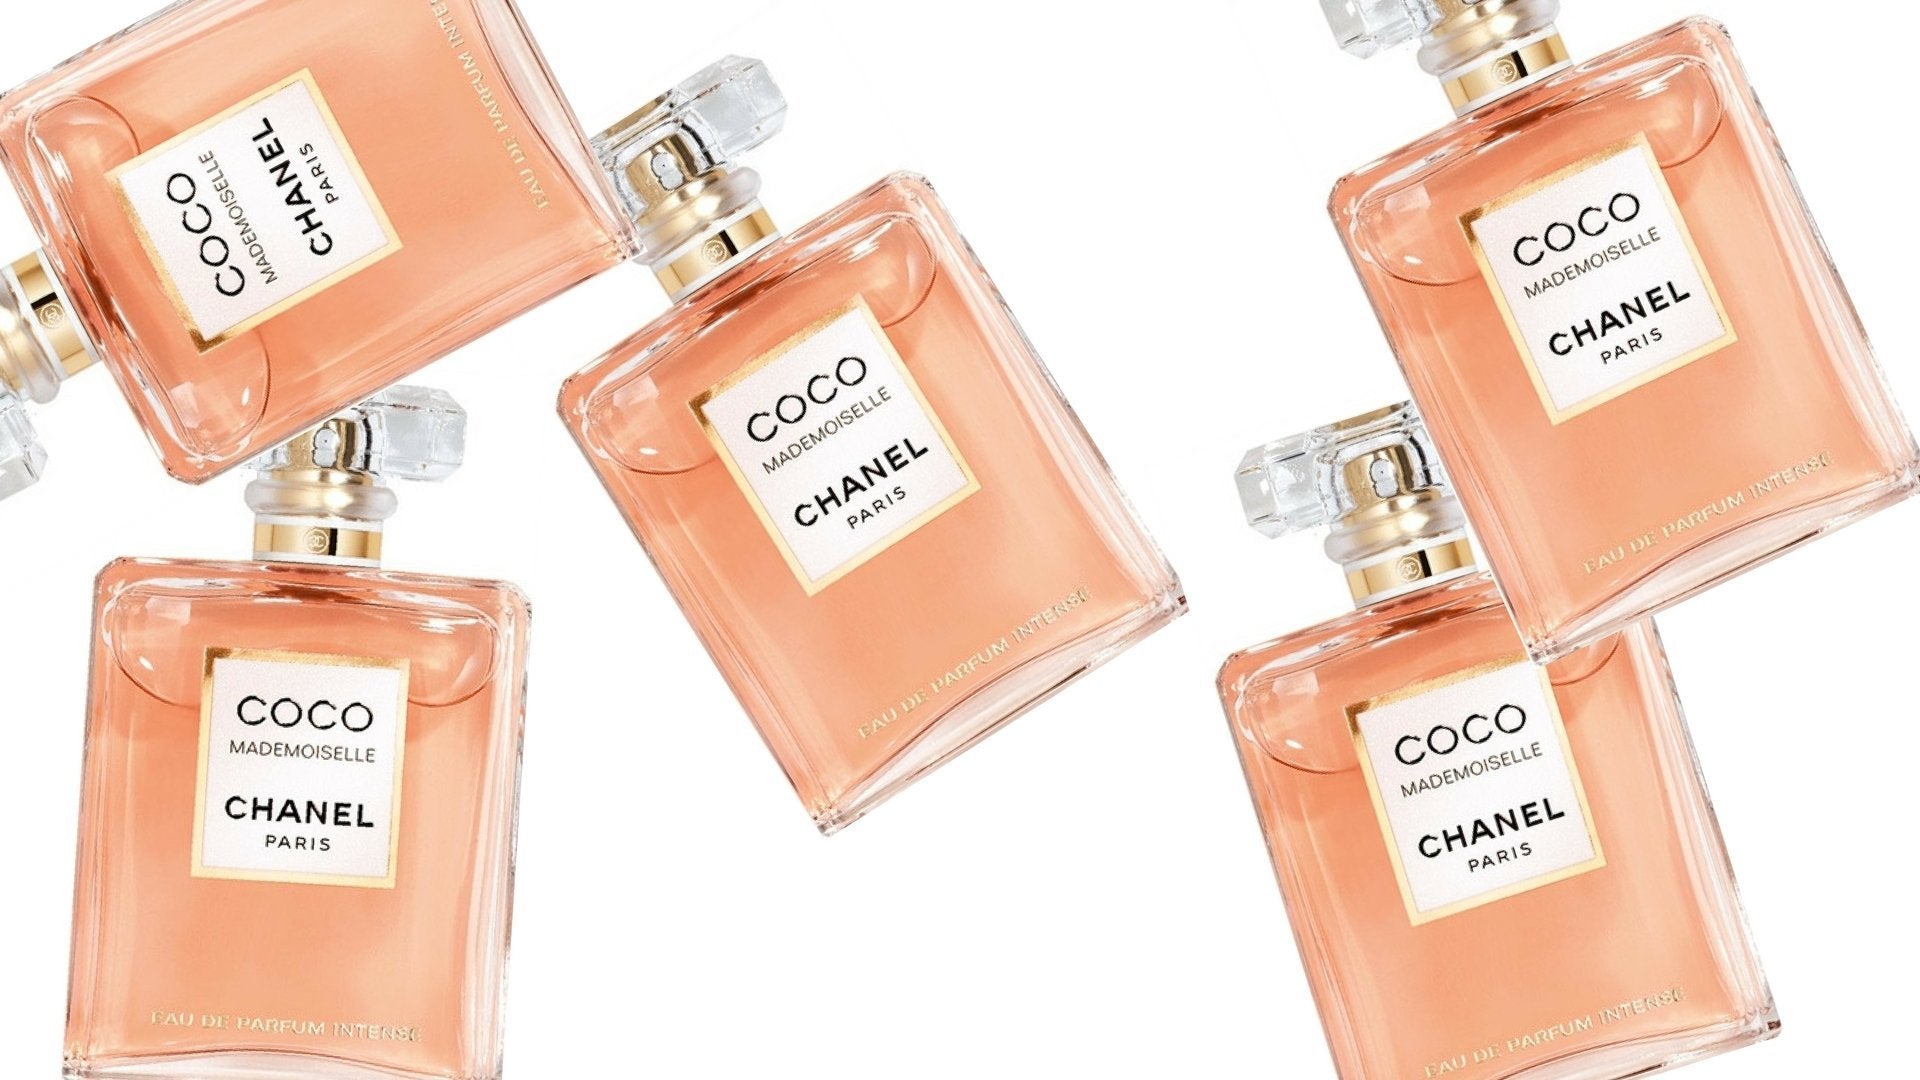 chanel coco mademoiselle parfum